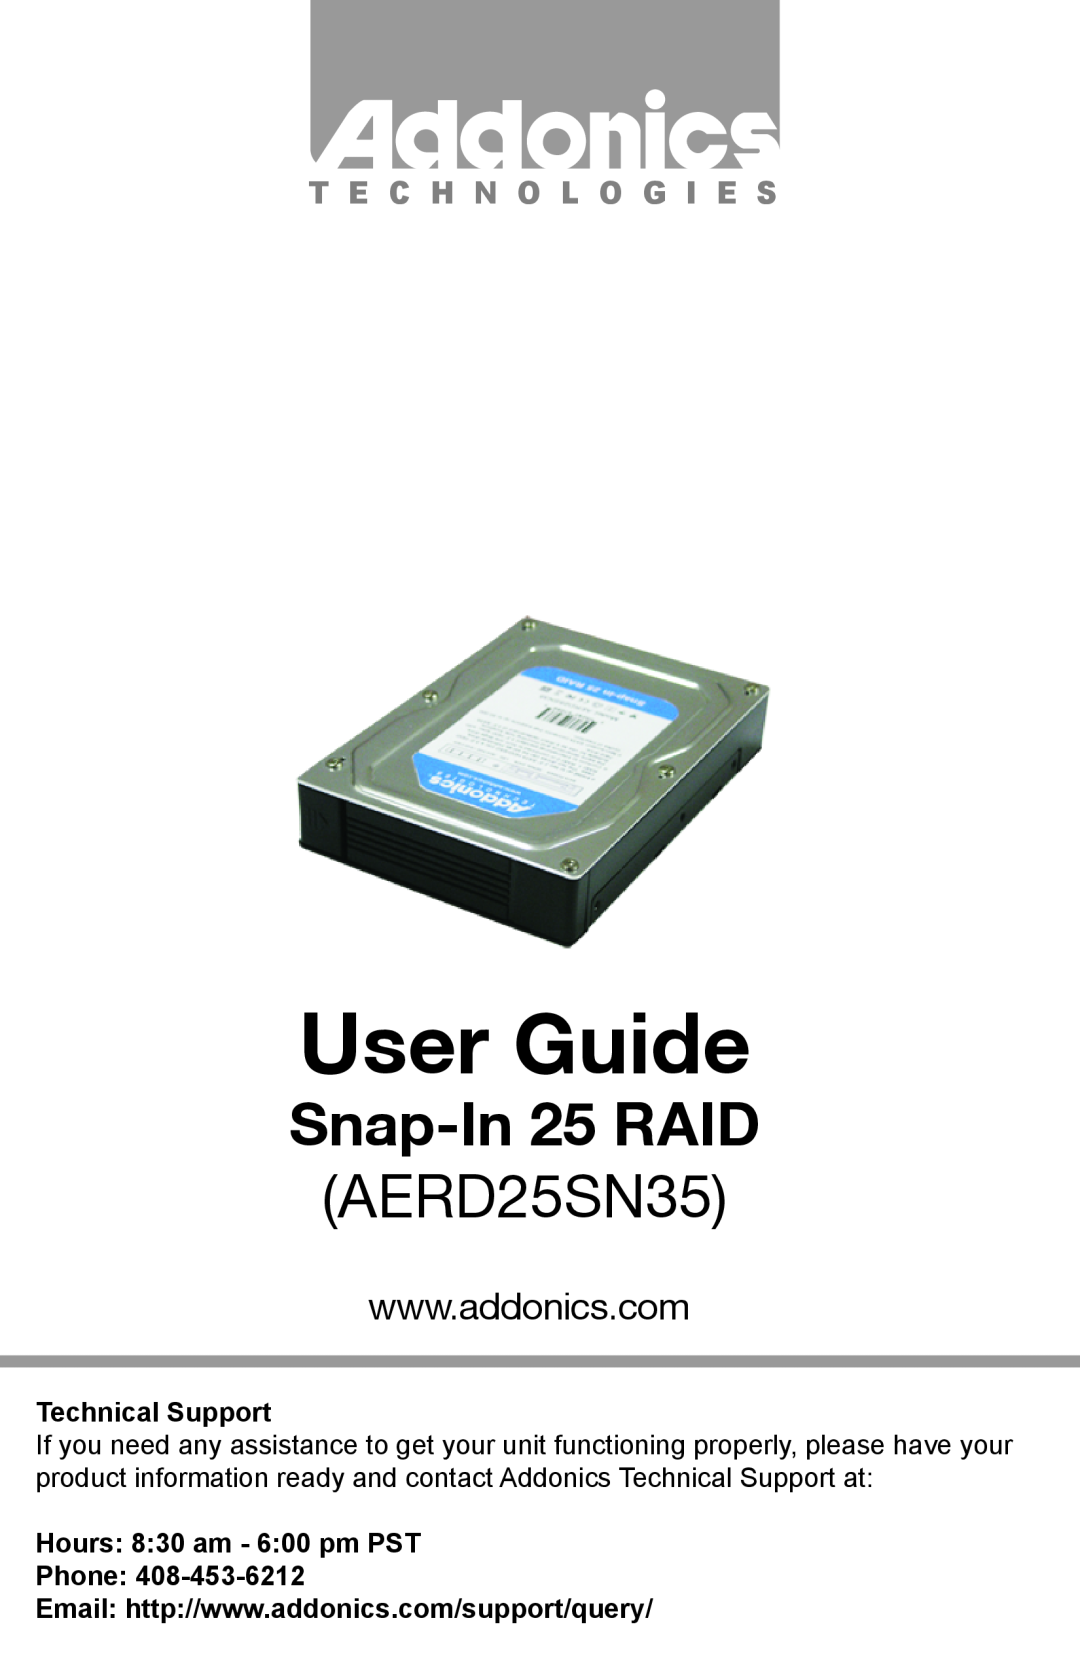 Addonics Technologies AERD25SN35 manual User Guide, Snap-In 25 RAID, T E C H N O L O G I E S, Technical Support 